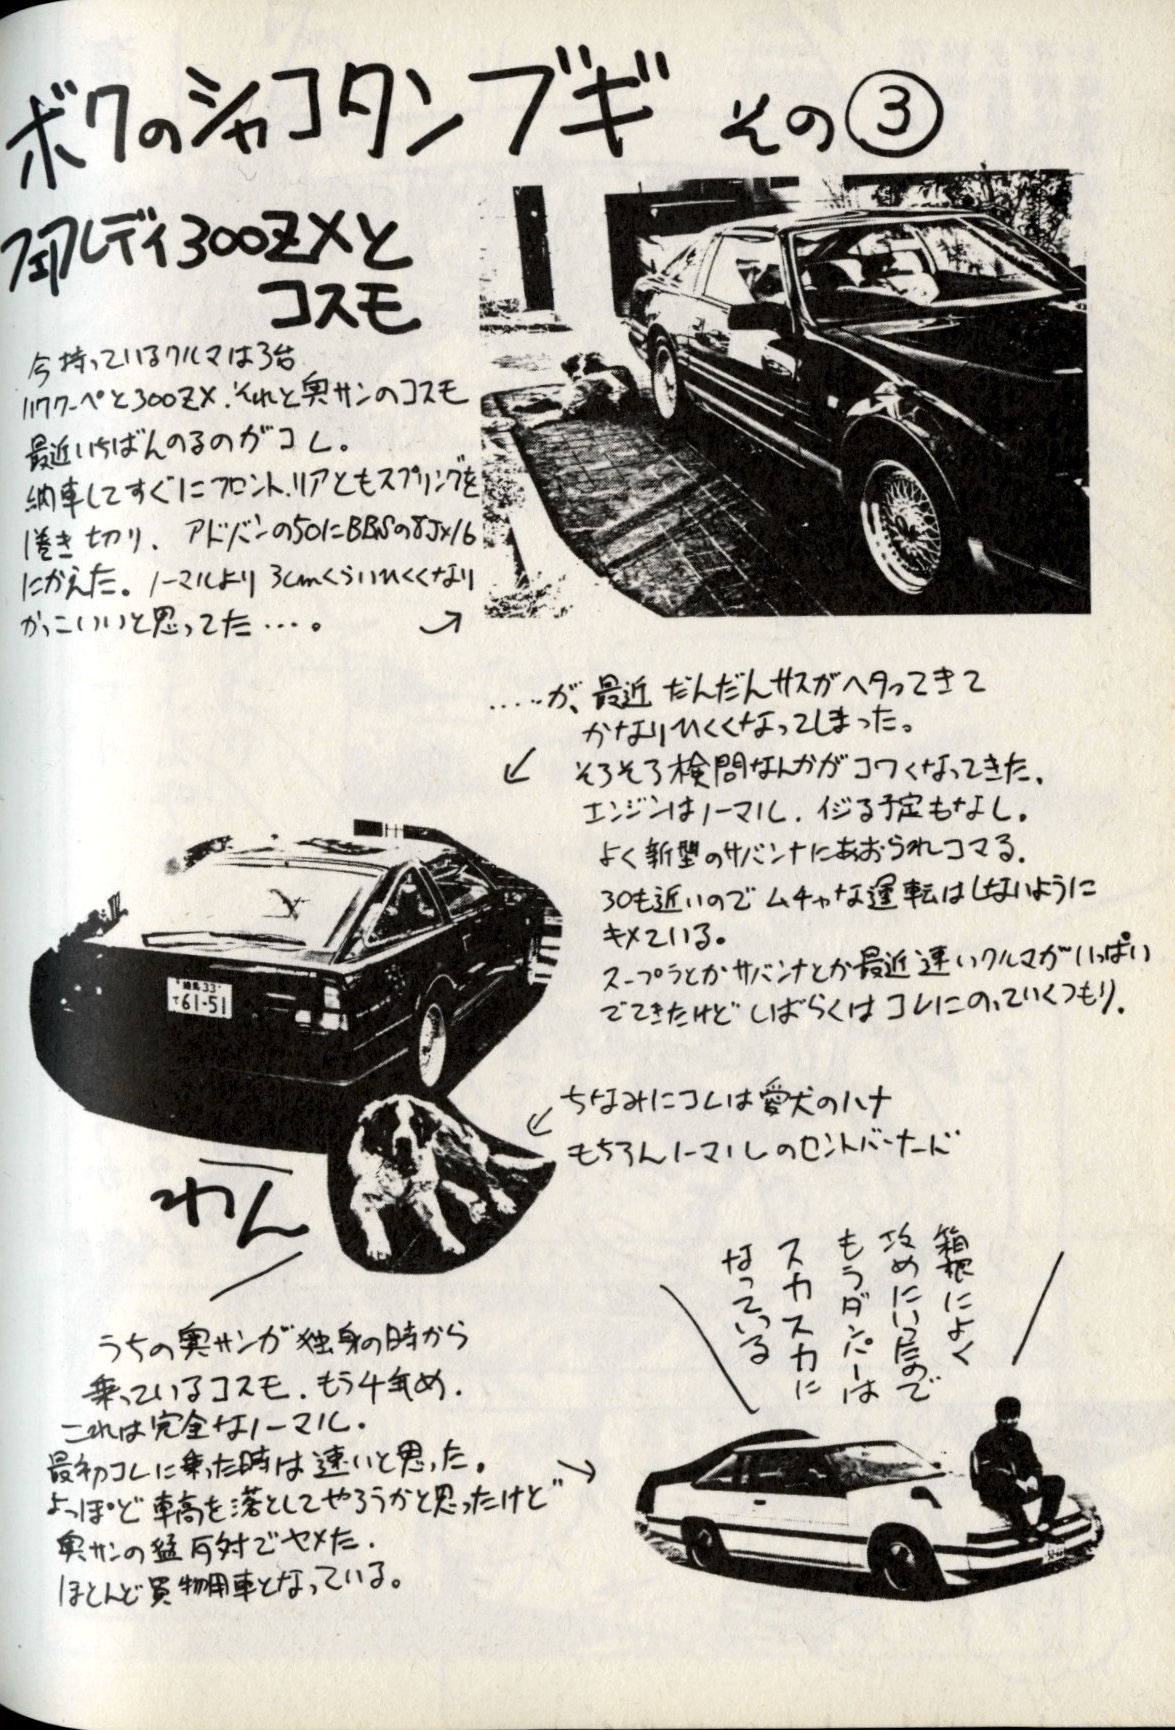 Nissan Fairlady Z Z31 and Mazda Cosmo HB